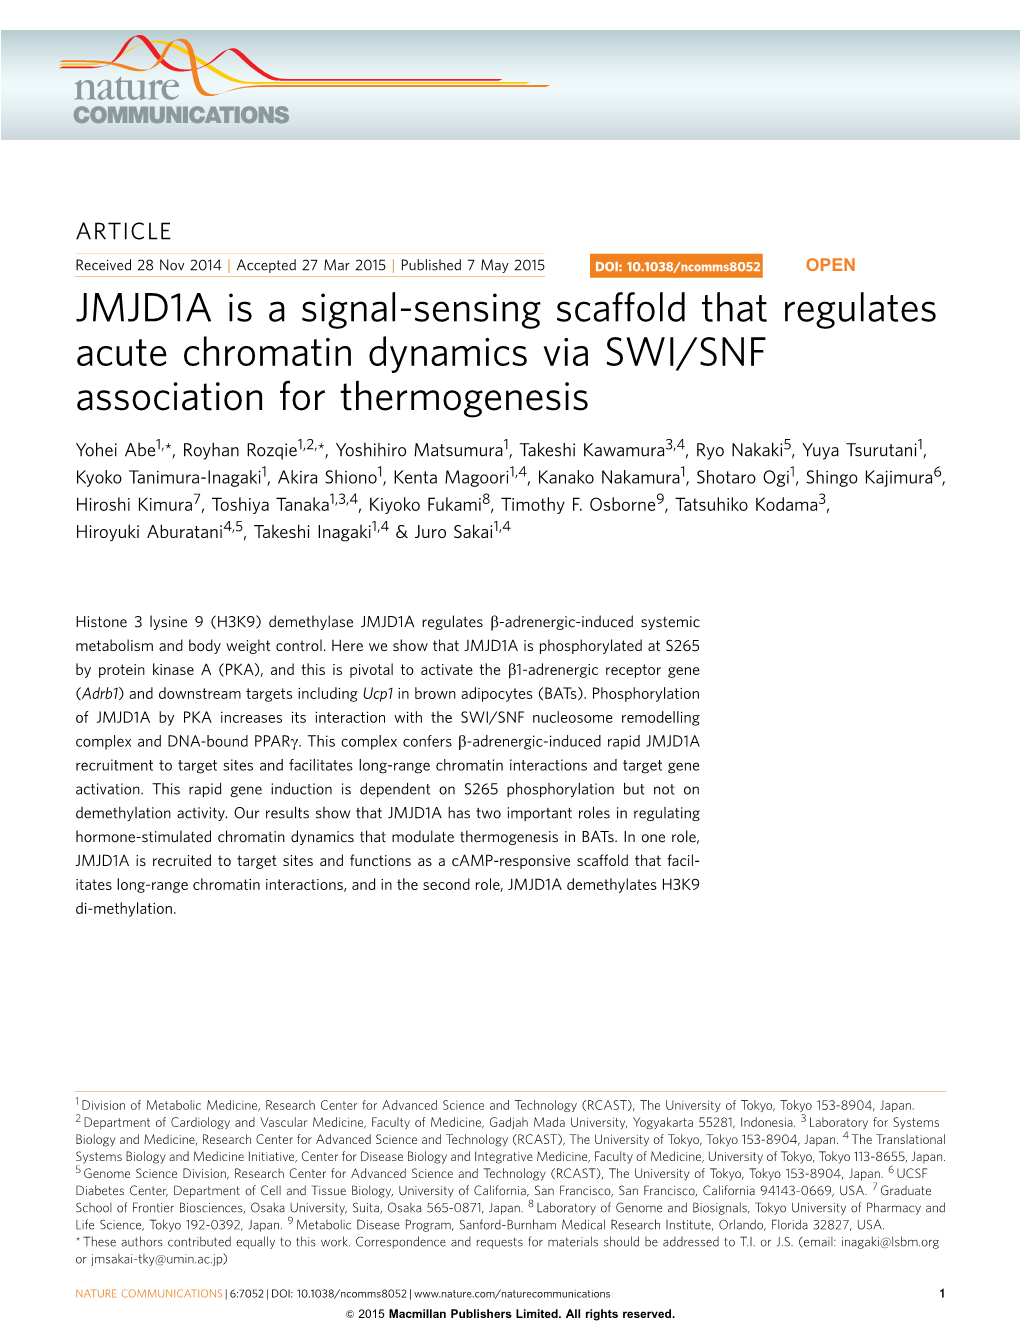 JMJD1A Is a Signal-Sensing Scaffold That Regulates Acute Chromatin Dynamics Via SWI/SNF Association for Thermogenesis